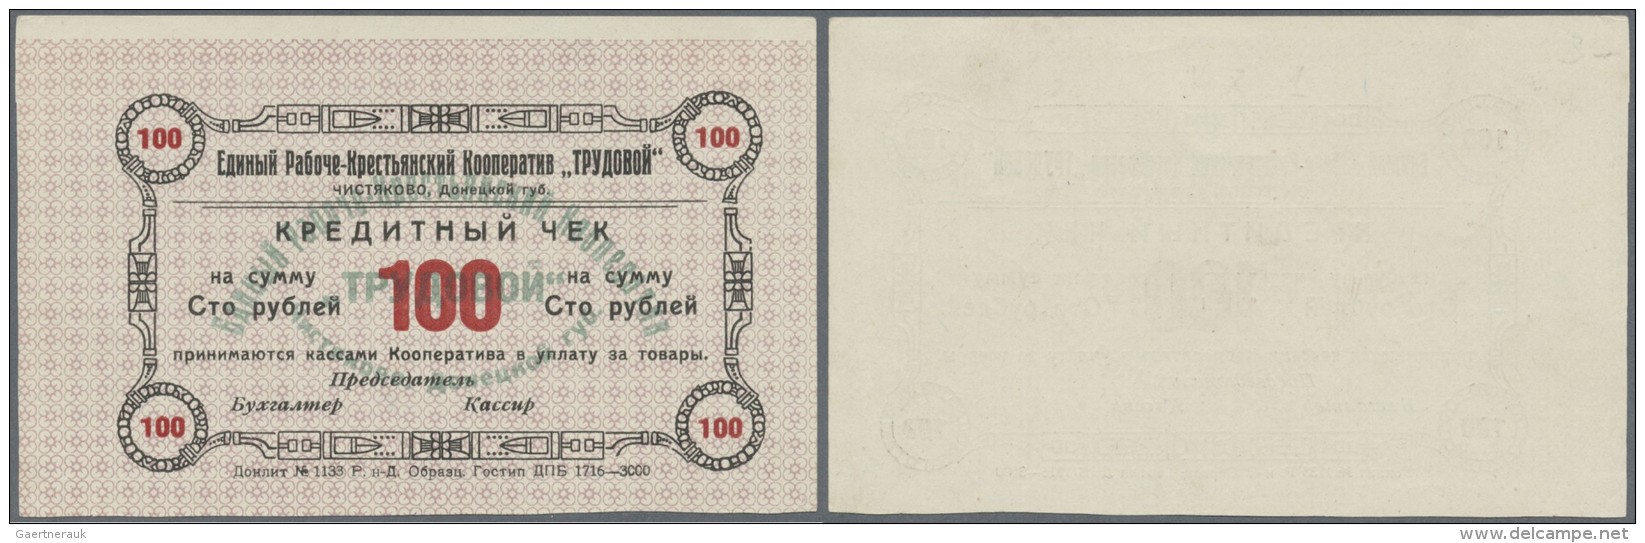 Ukraina / Ukraine: Chistjakov 100 Rubles Voucher Remainder W/o Signature, ND, P.NL (R 19303) In AUNC Condition - Ukraine